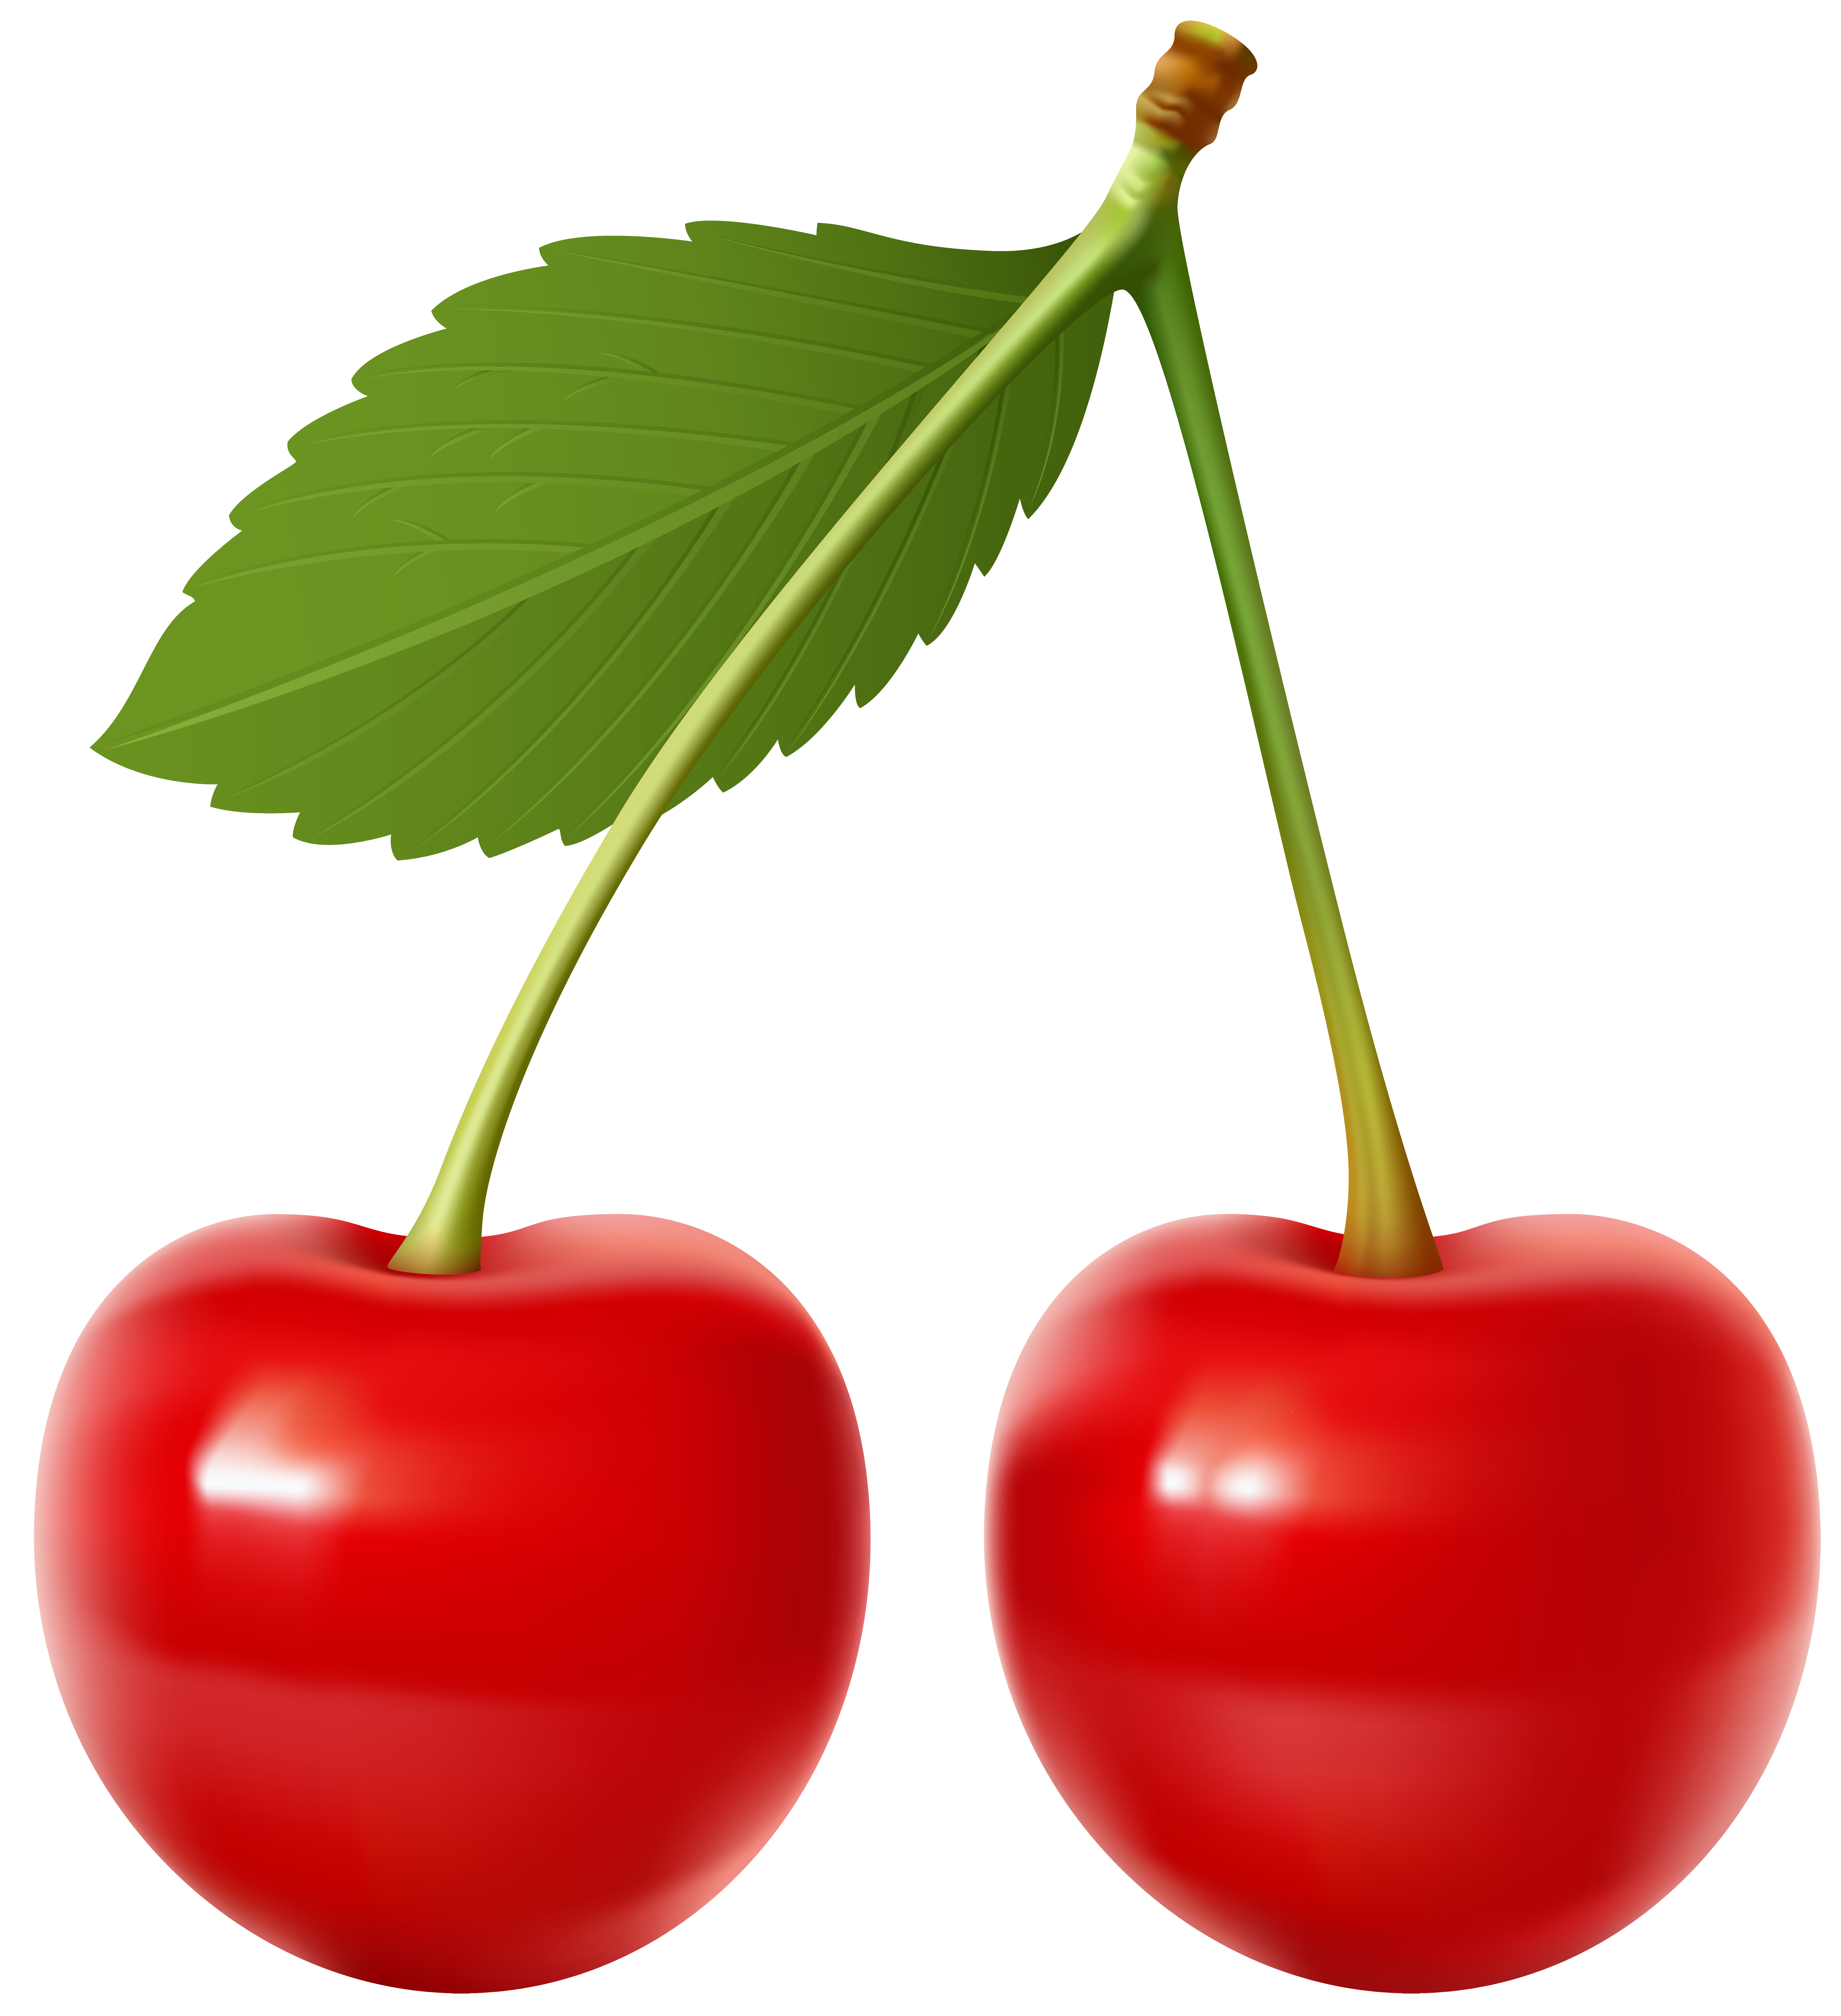 clipart fruit cherry